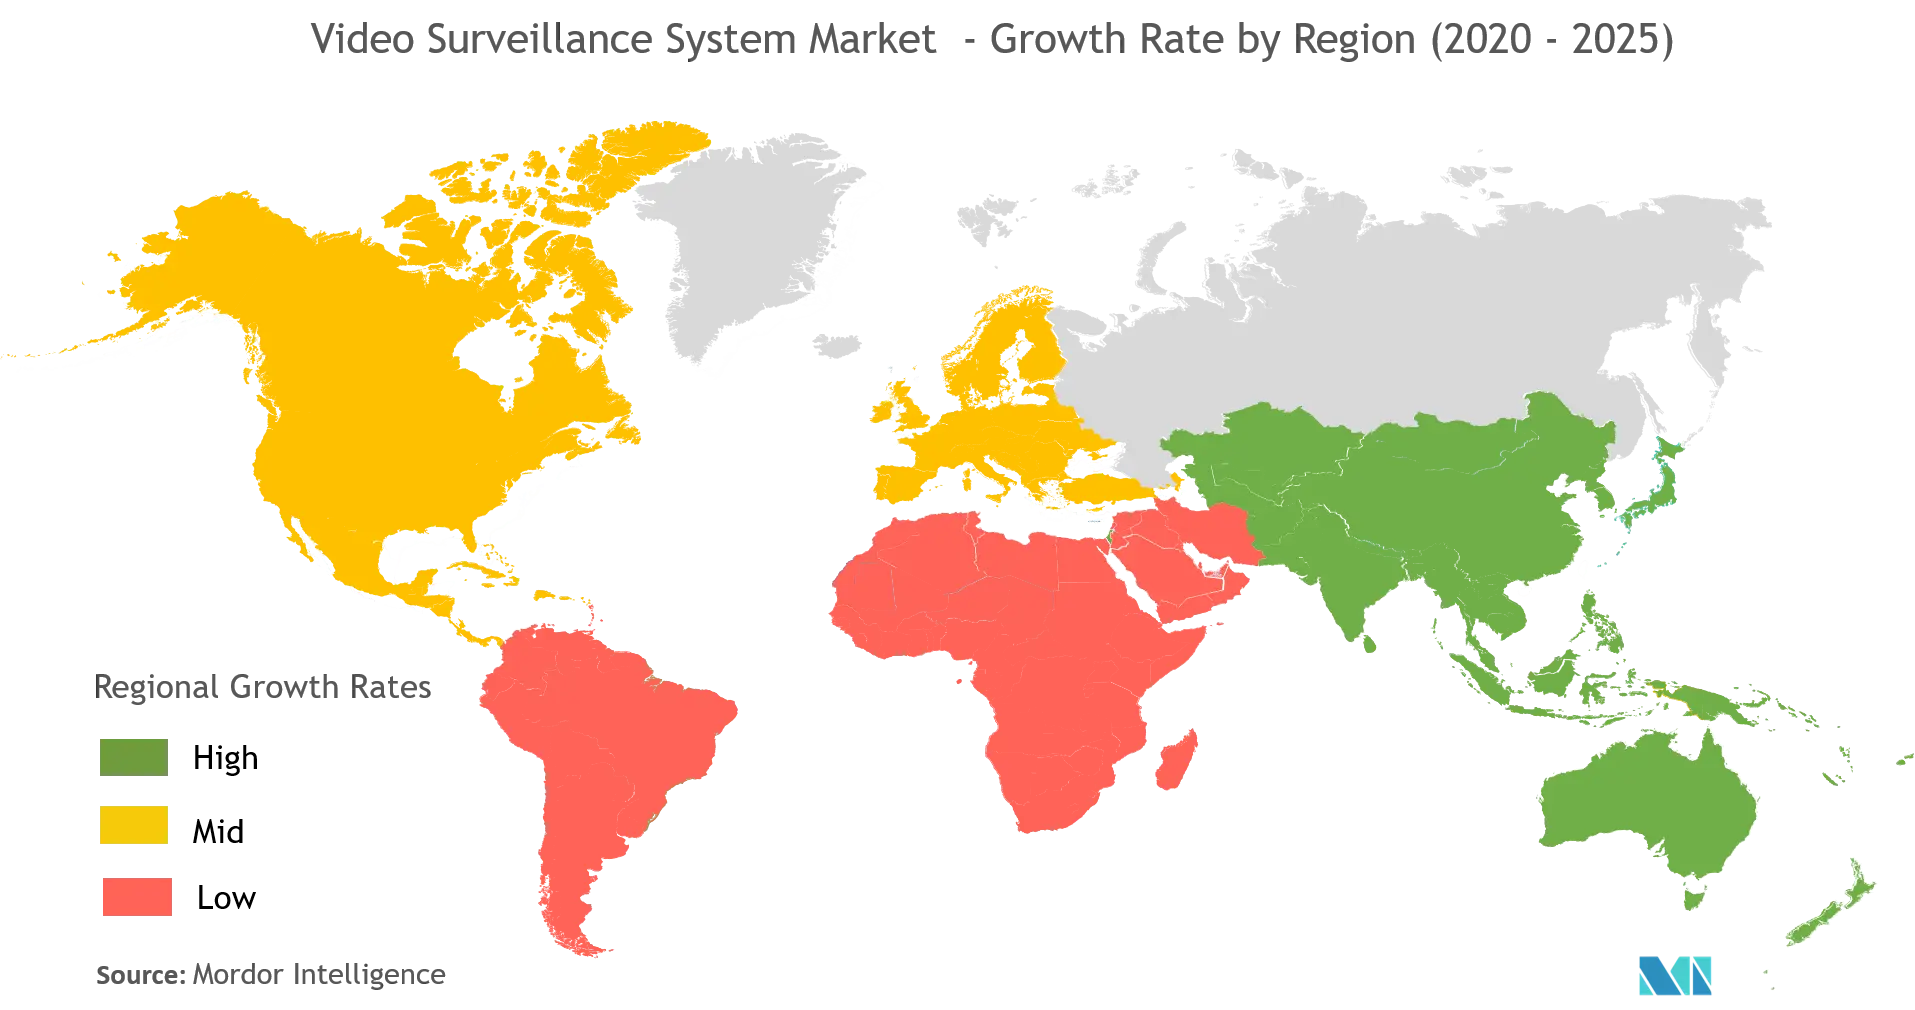 Video Surveillance System Market Growth